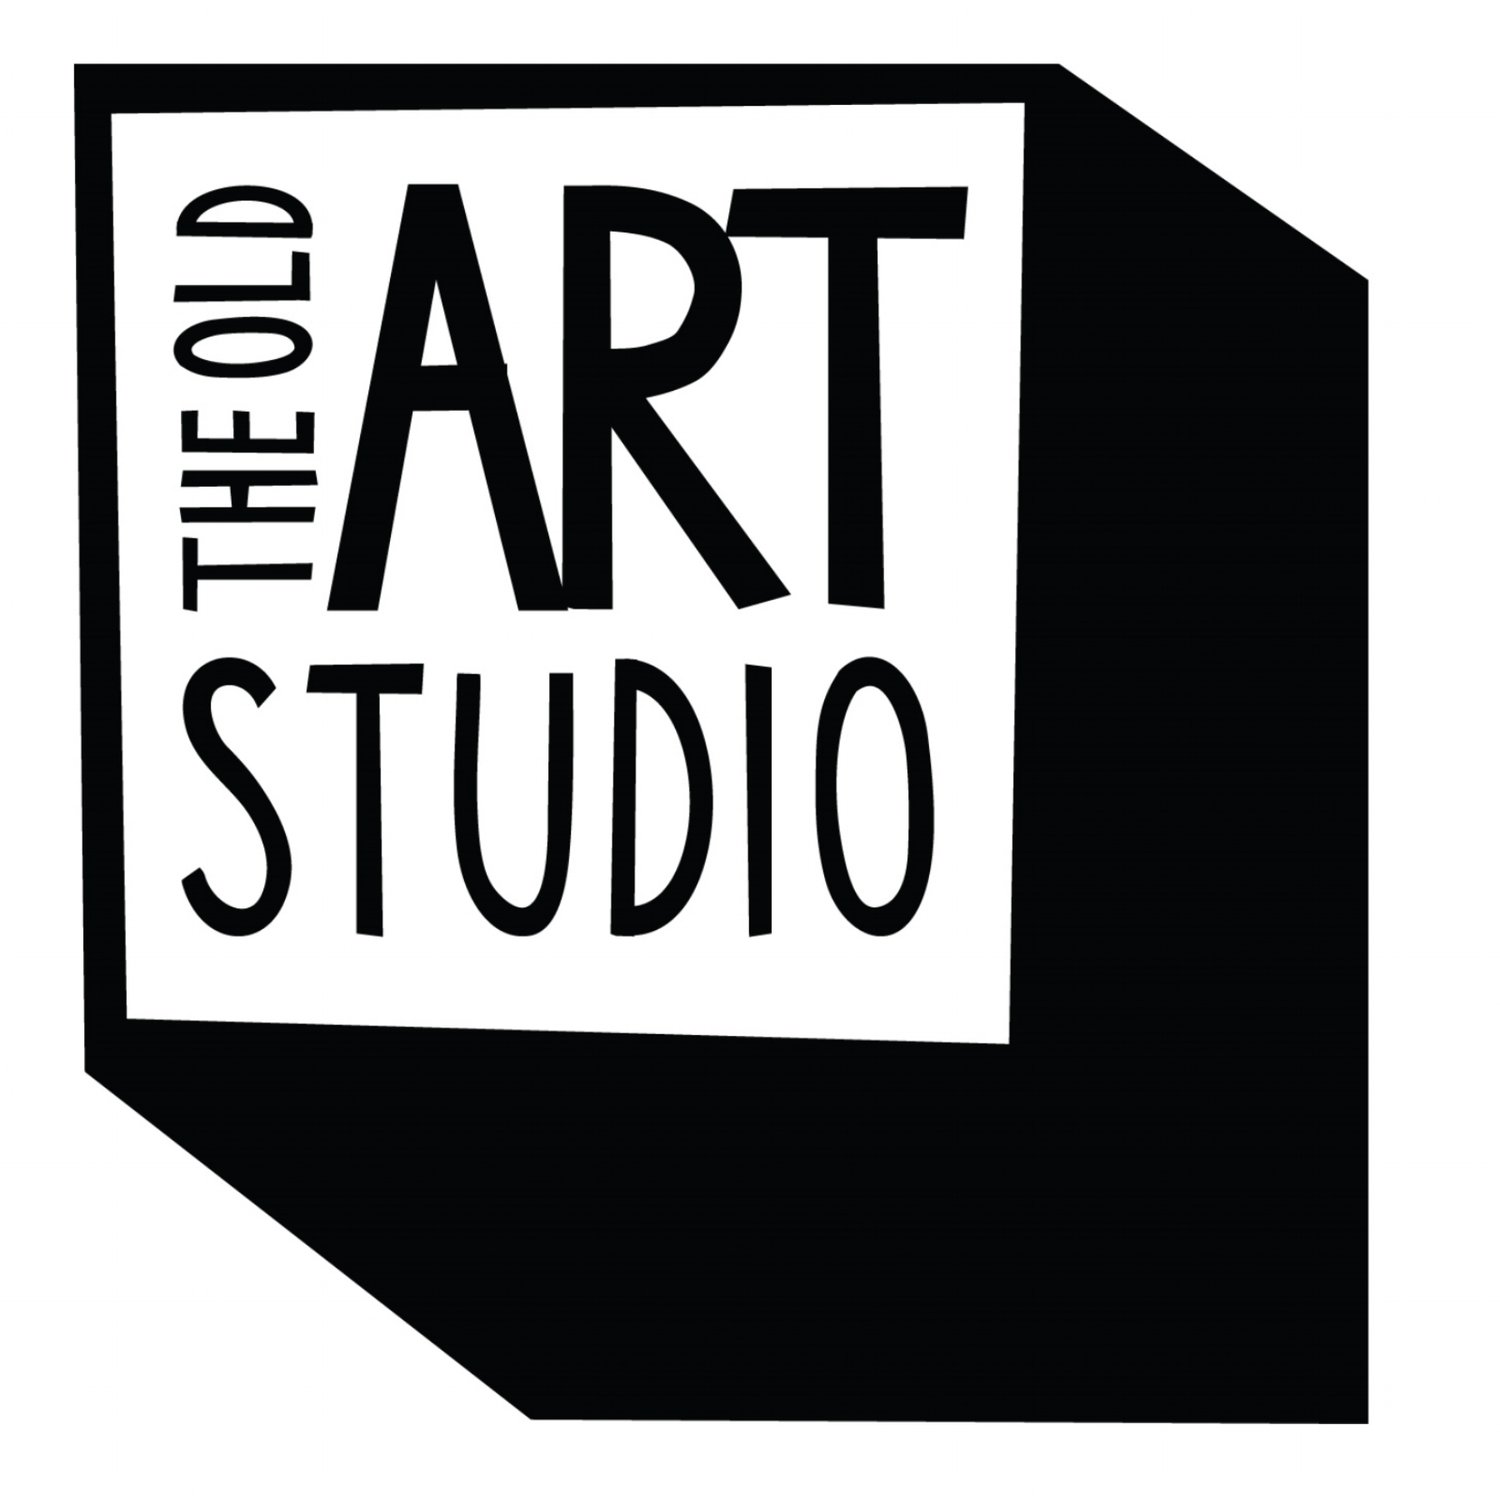 The Old Art Studio